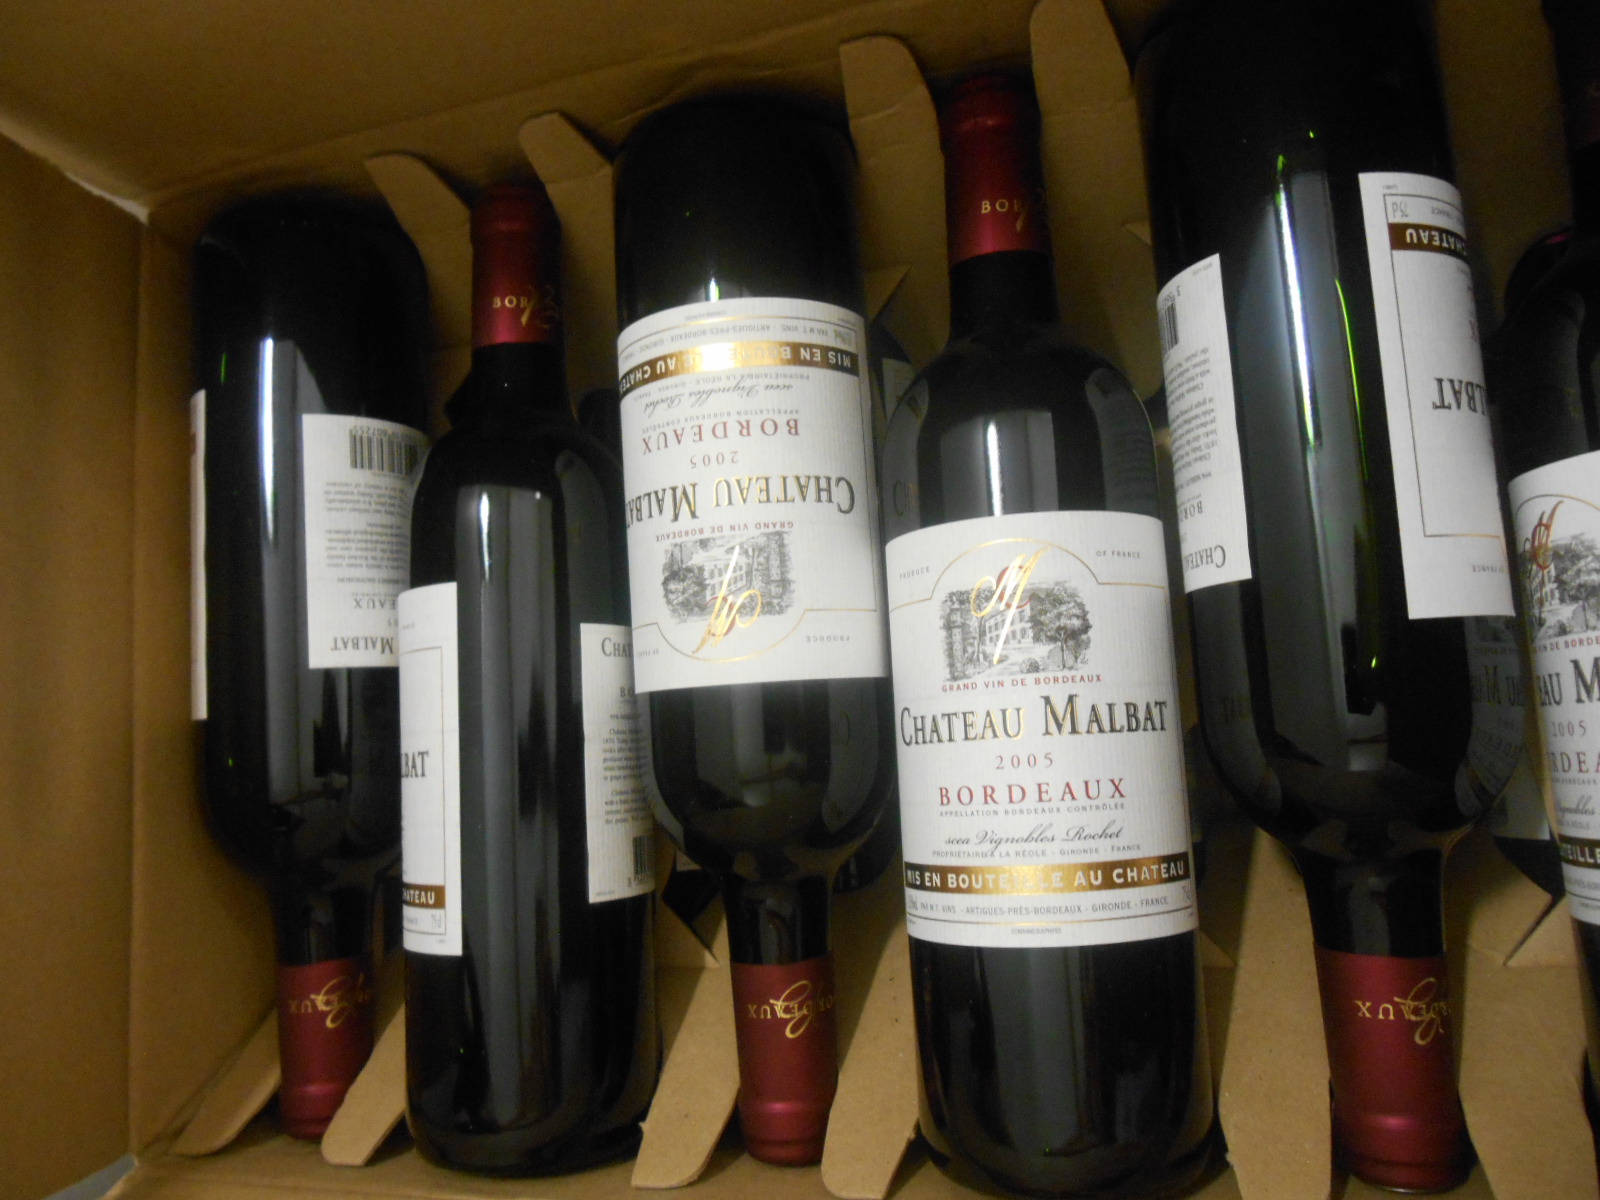 Chateau Malbat, Bordeaux 2005, twelve bottles in carton